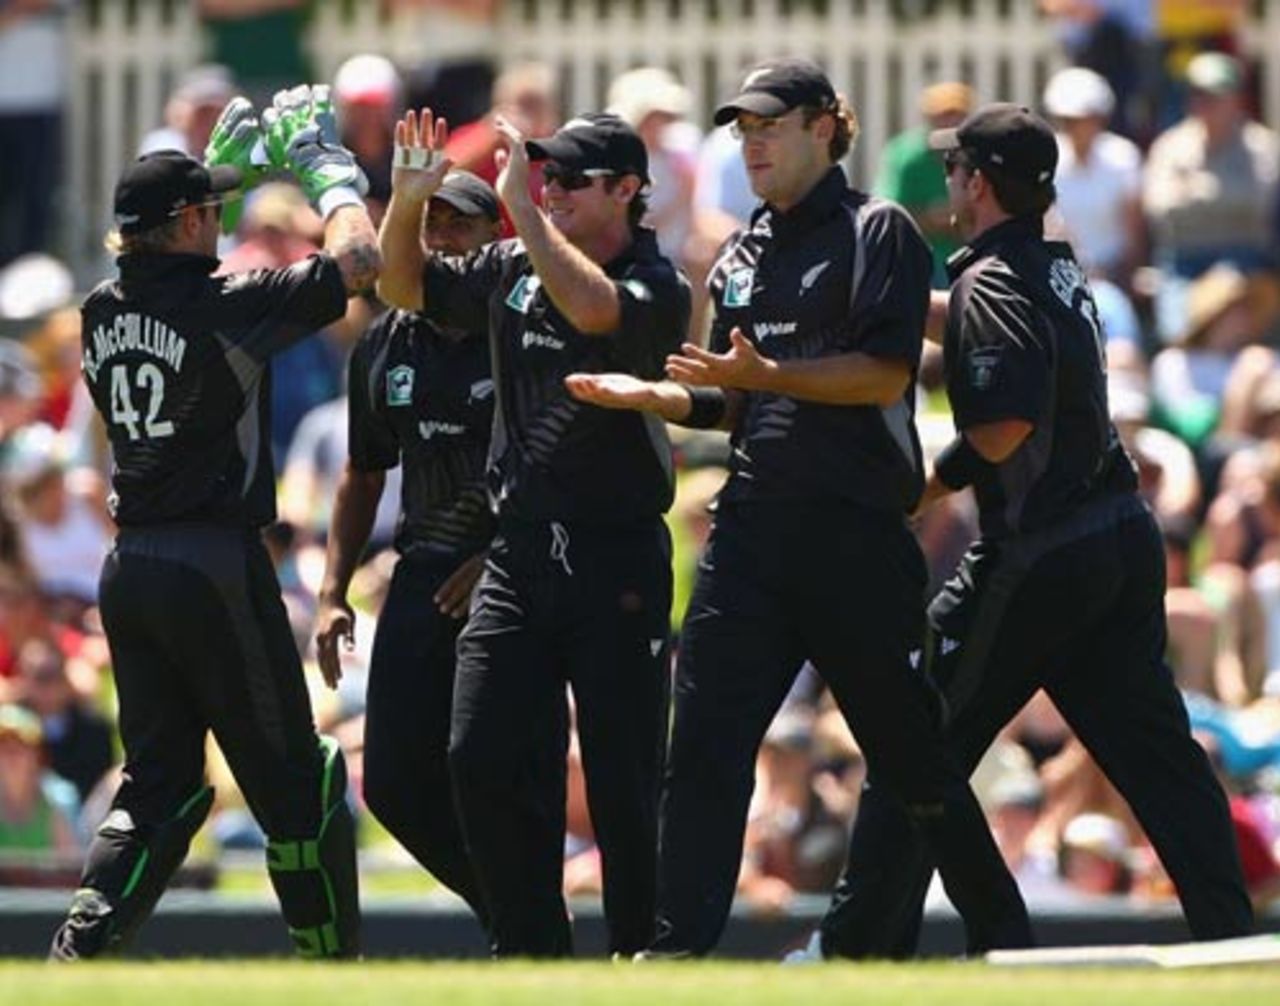 The New Zealand side celebrate a wicket, Australia v New Zealand, 3rd ODI, Hobart, December 20, 2007